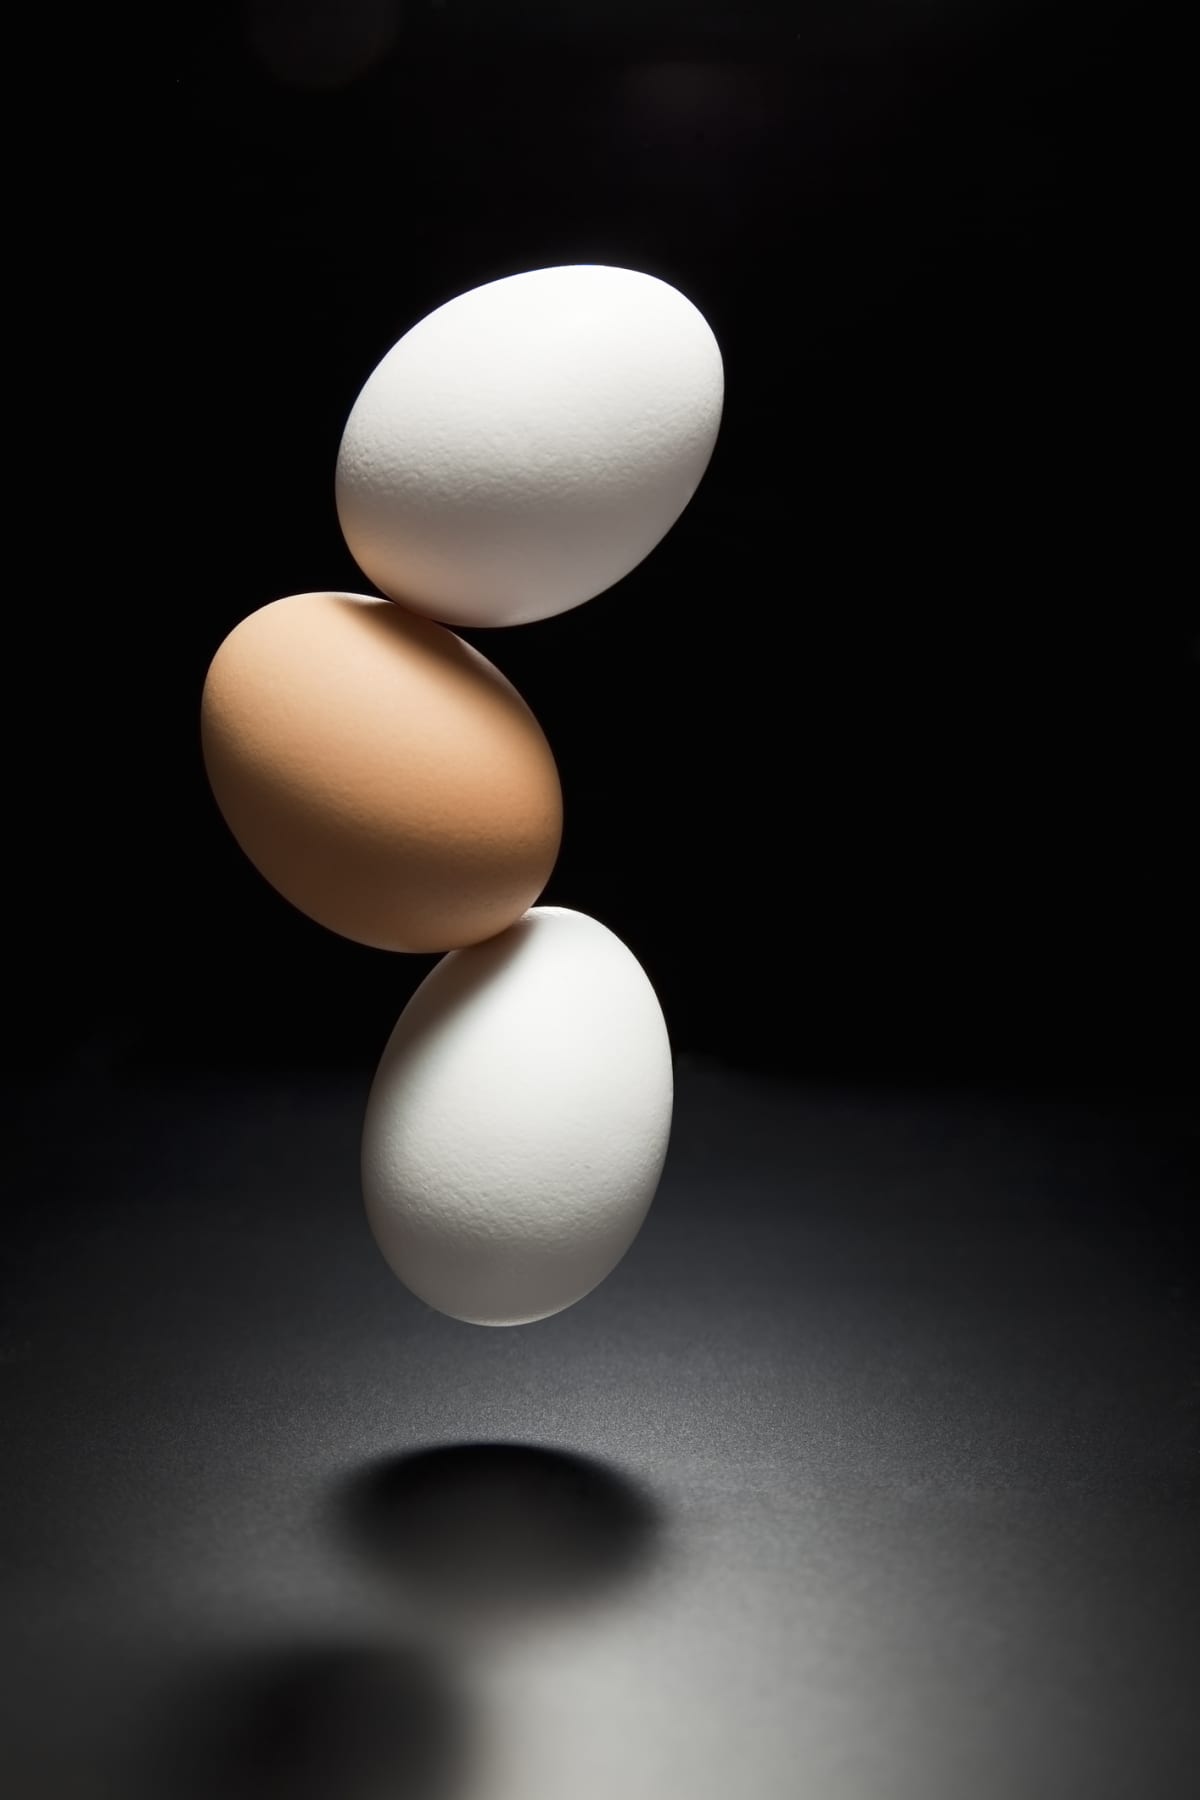 Three eggs falling on a black background